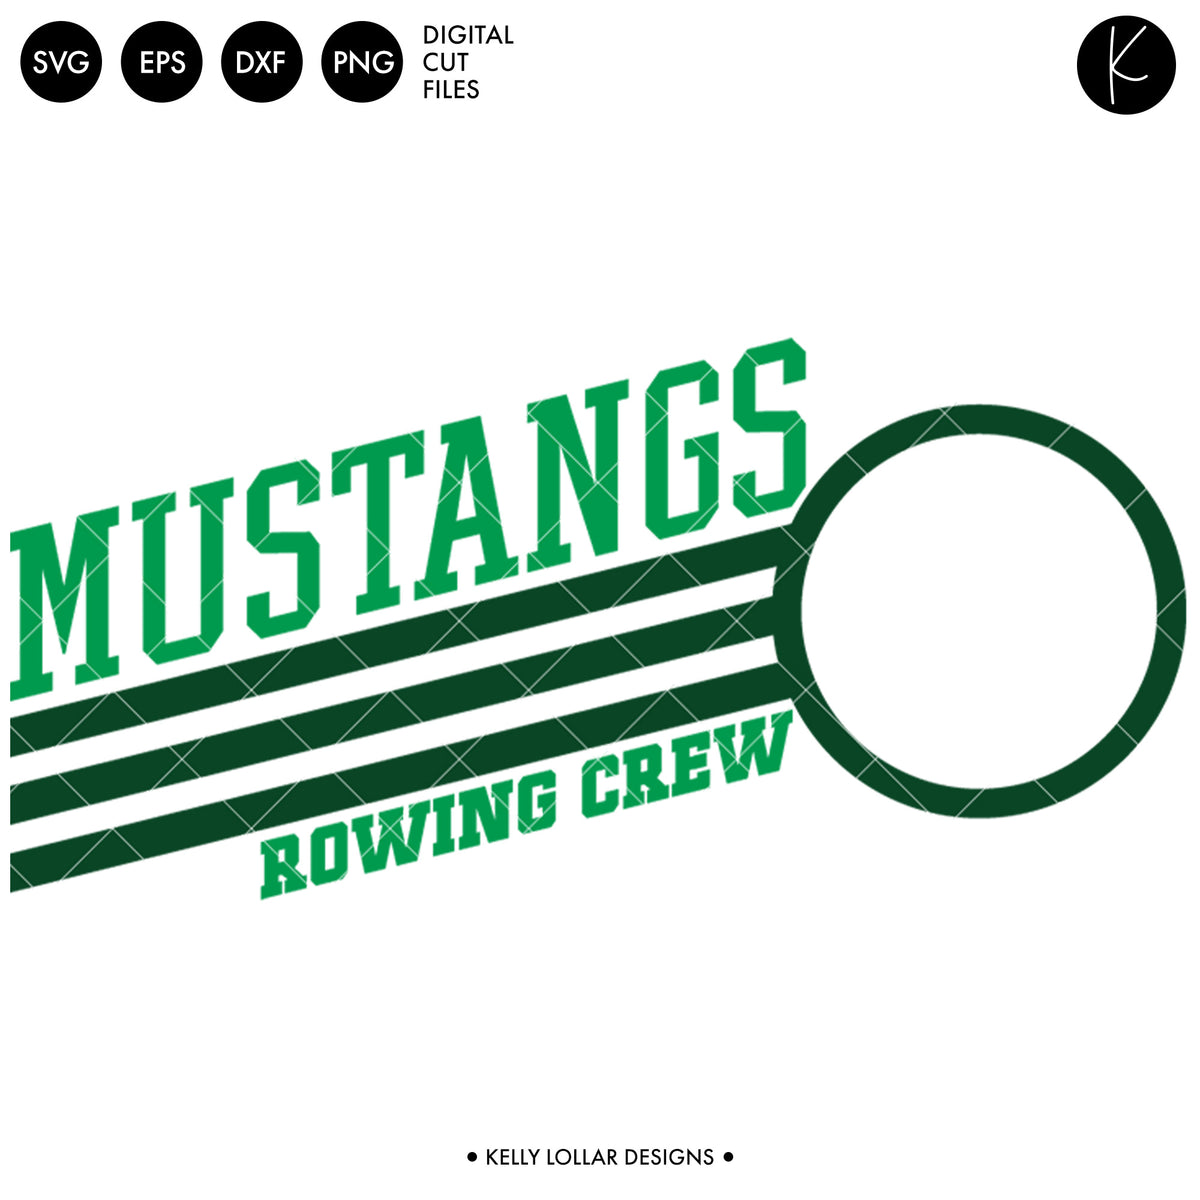 Mustangs Rowing Crew Bundle | SVG DXF EPS PNG Cut Files